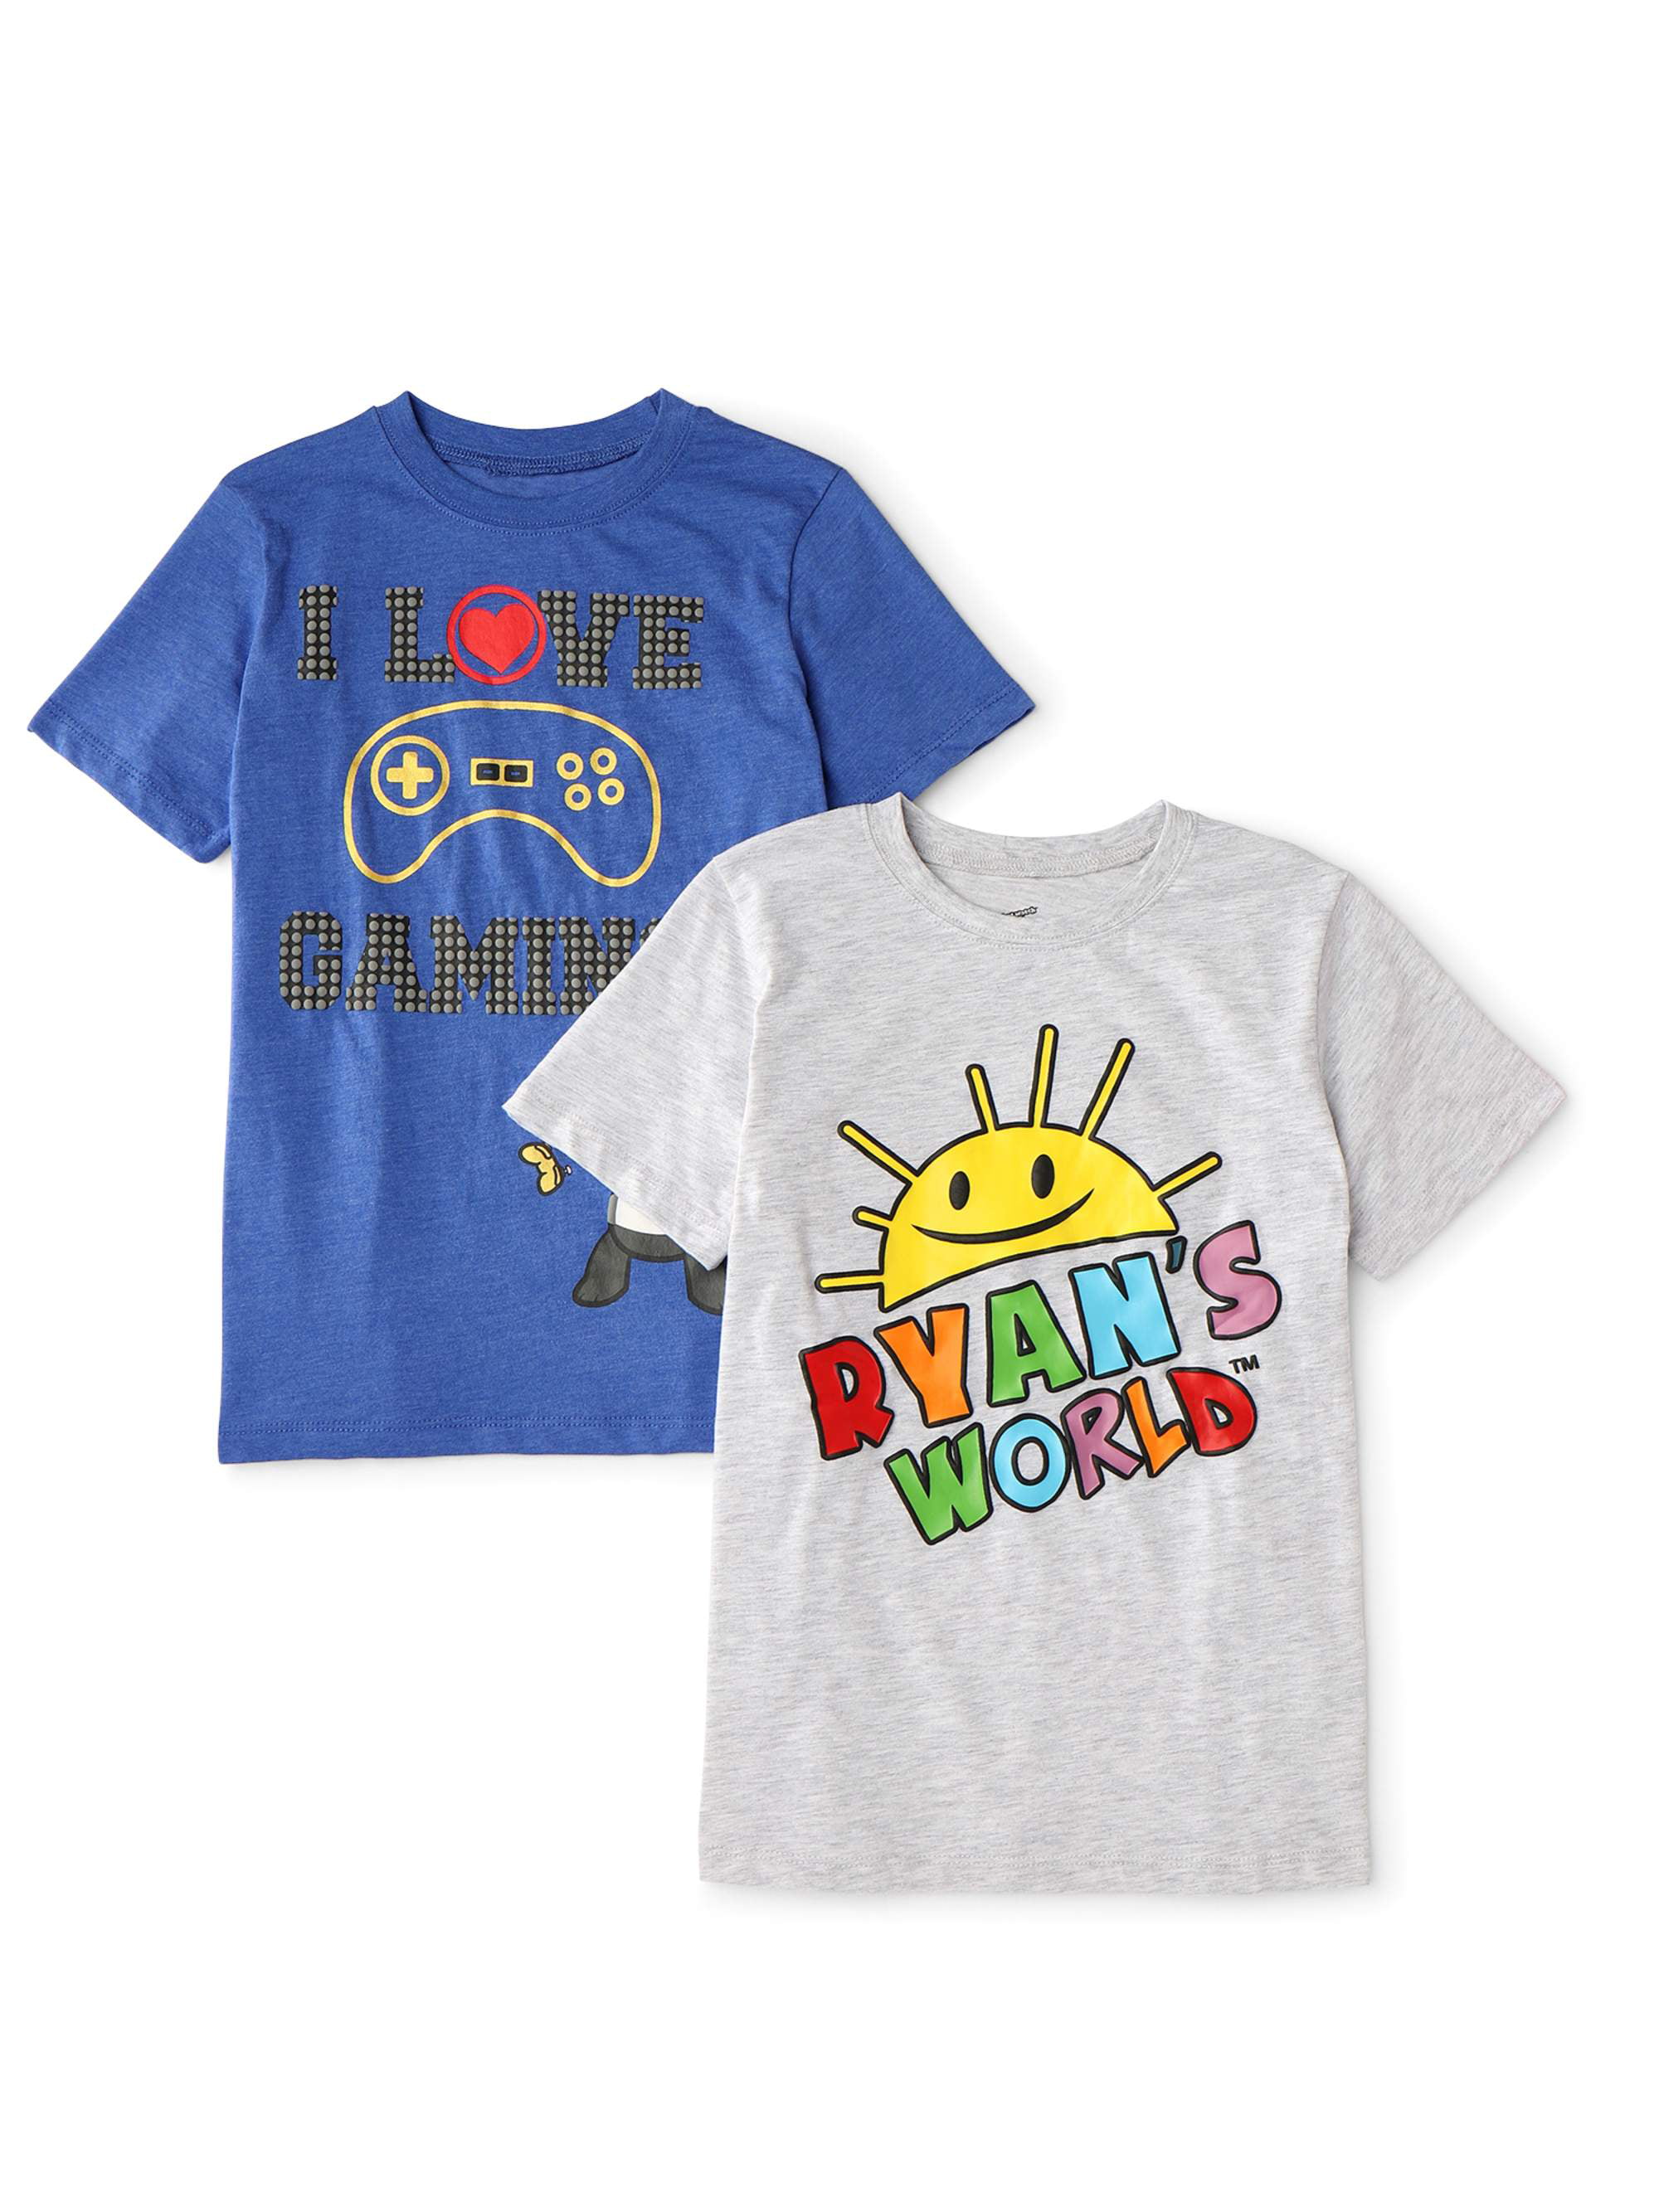 Ryan S World Ryan S World Boys Graphic Short Sleeve T Shirt 2